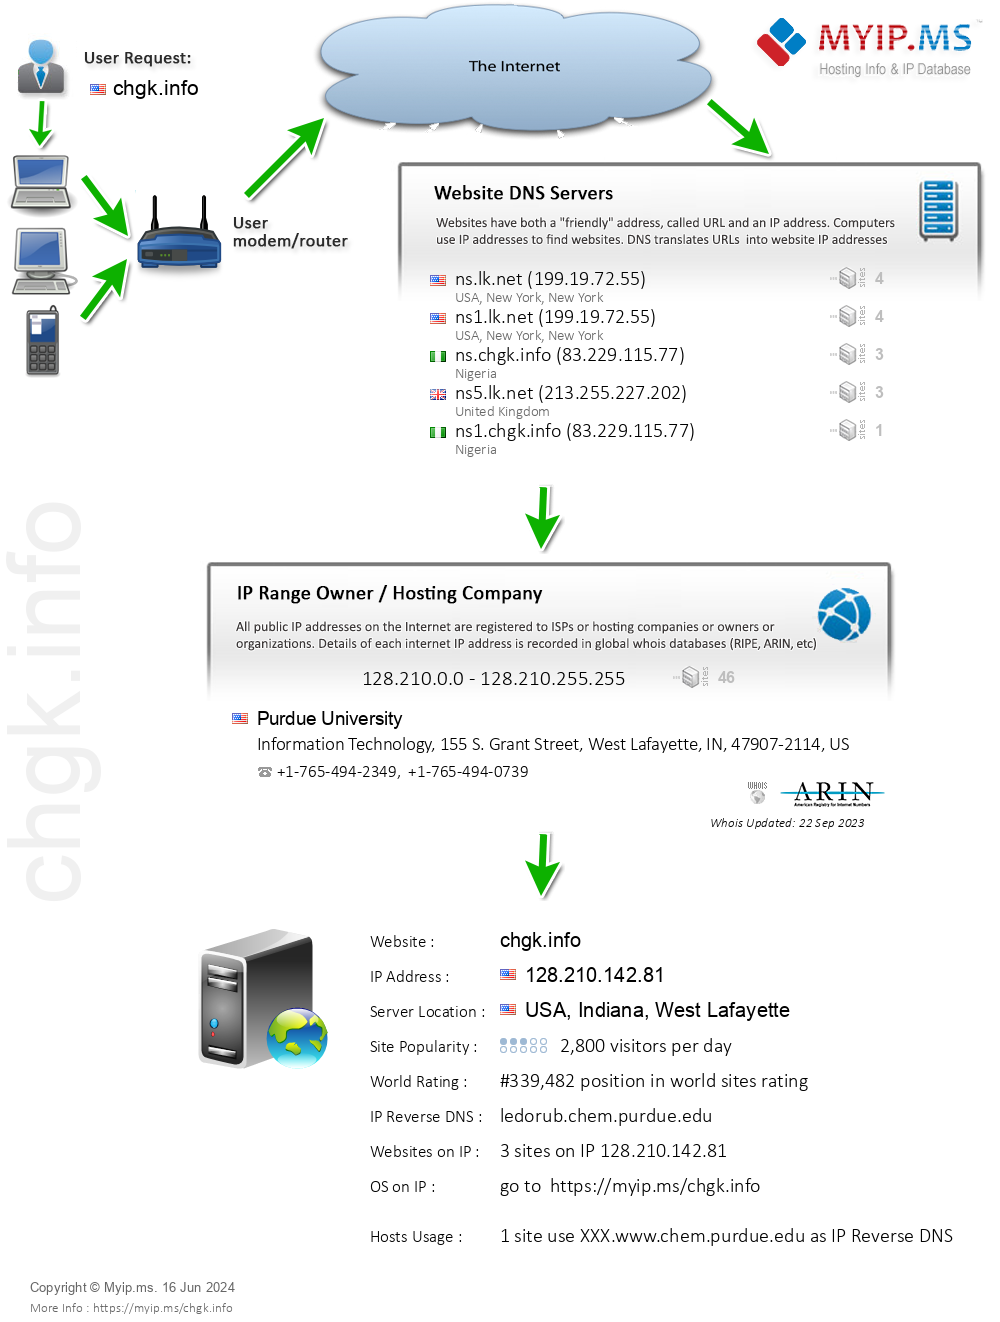 Chgk.info - Website Hosting Visual IP Diagram